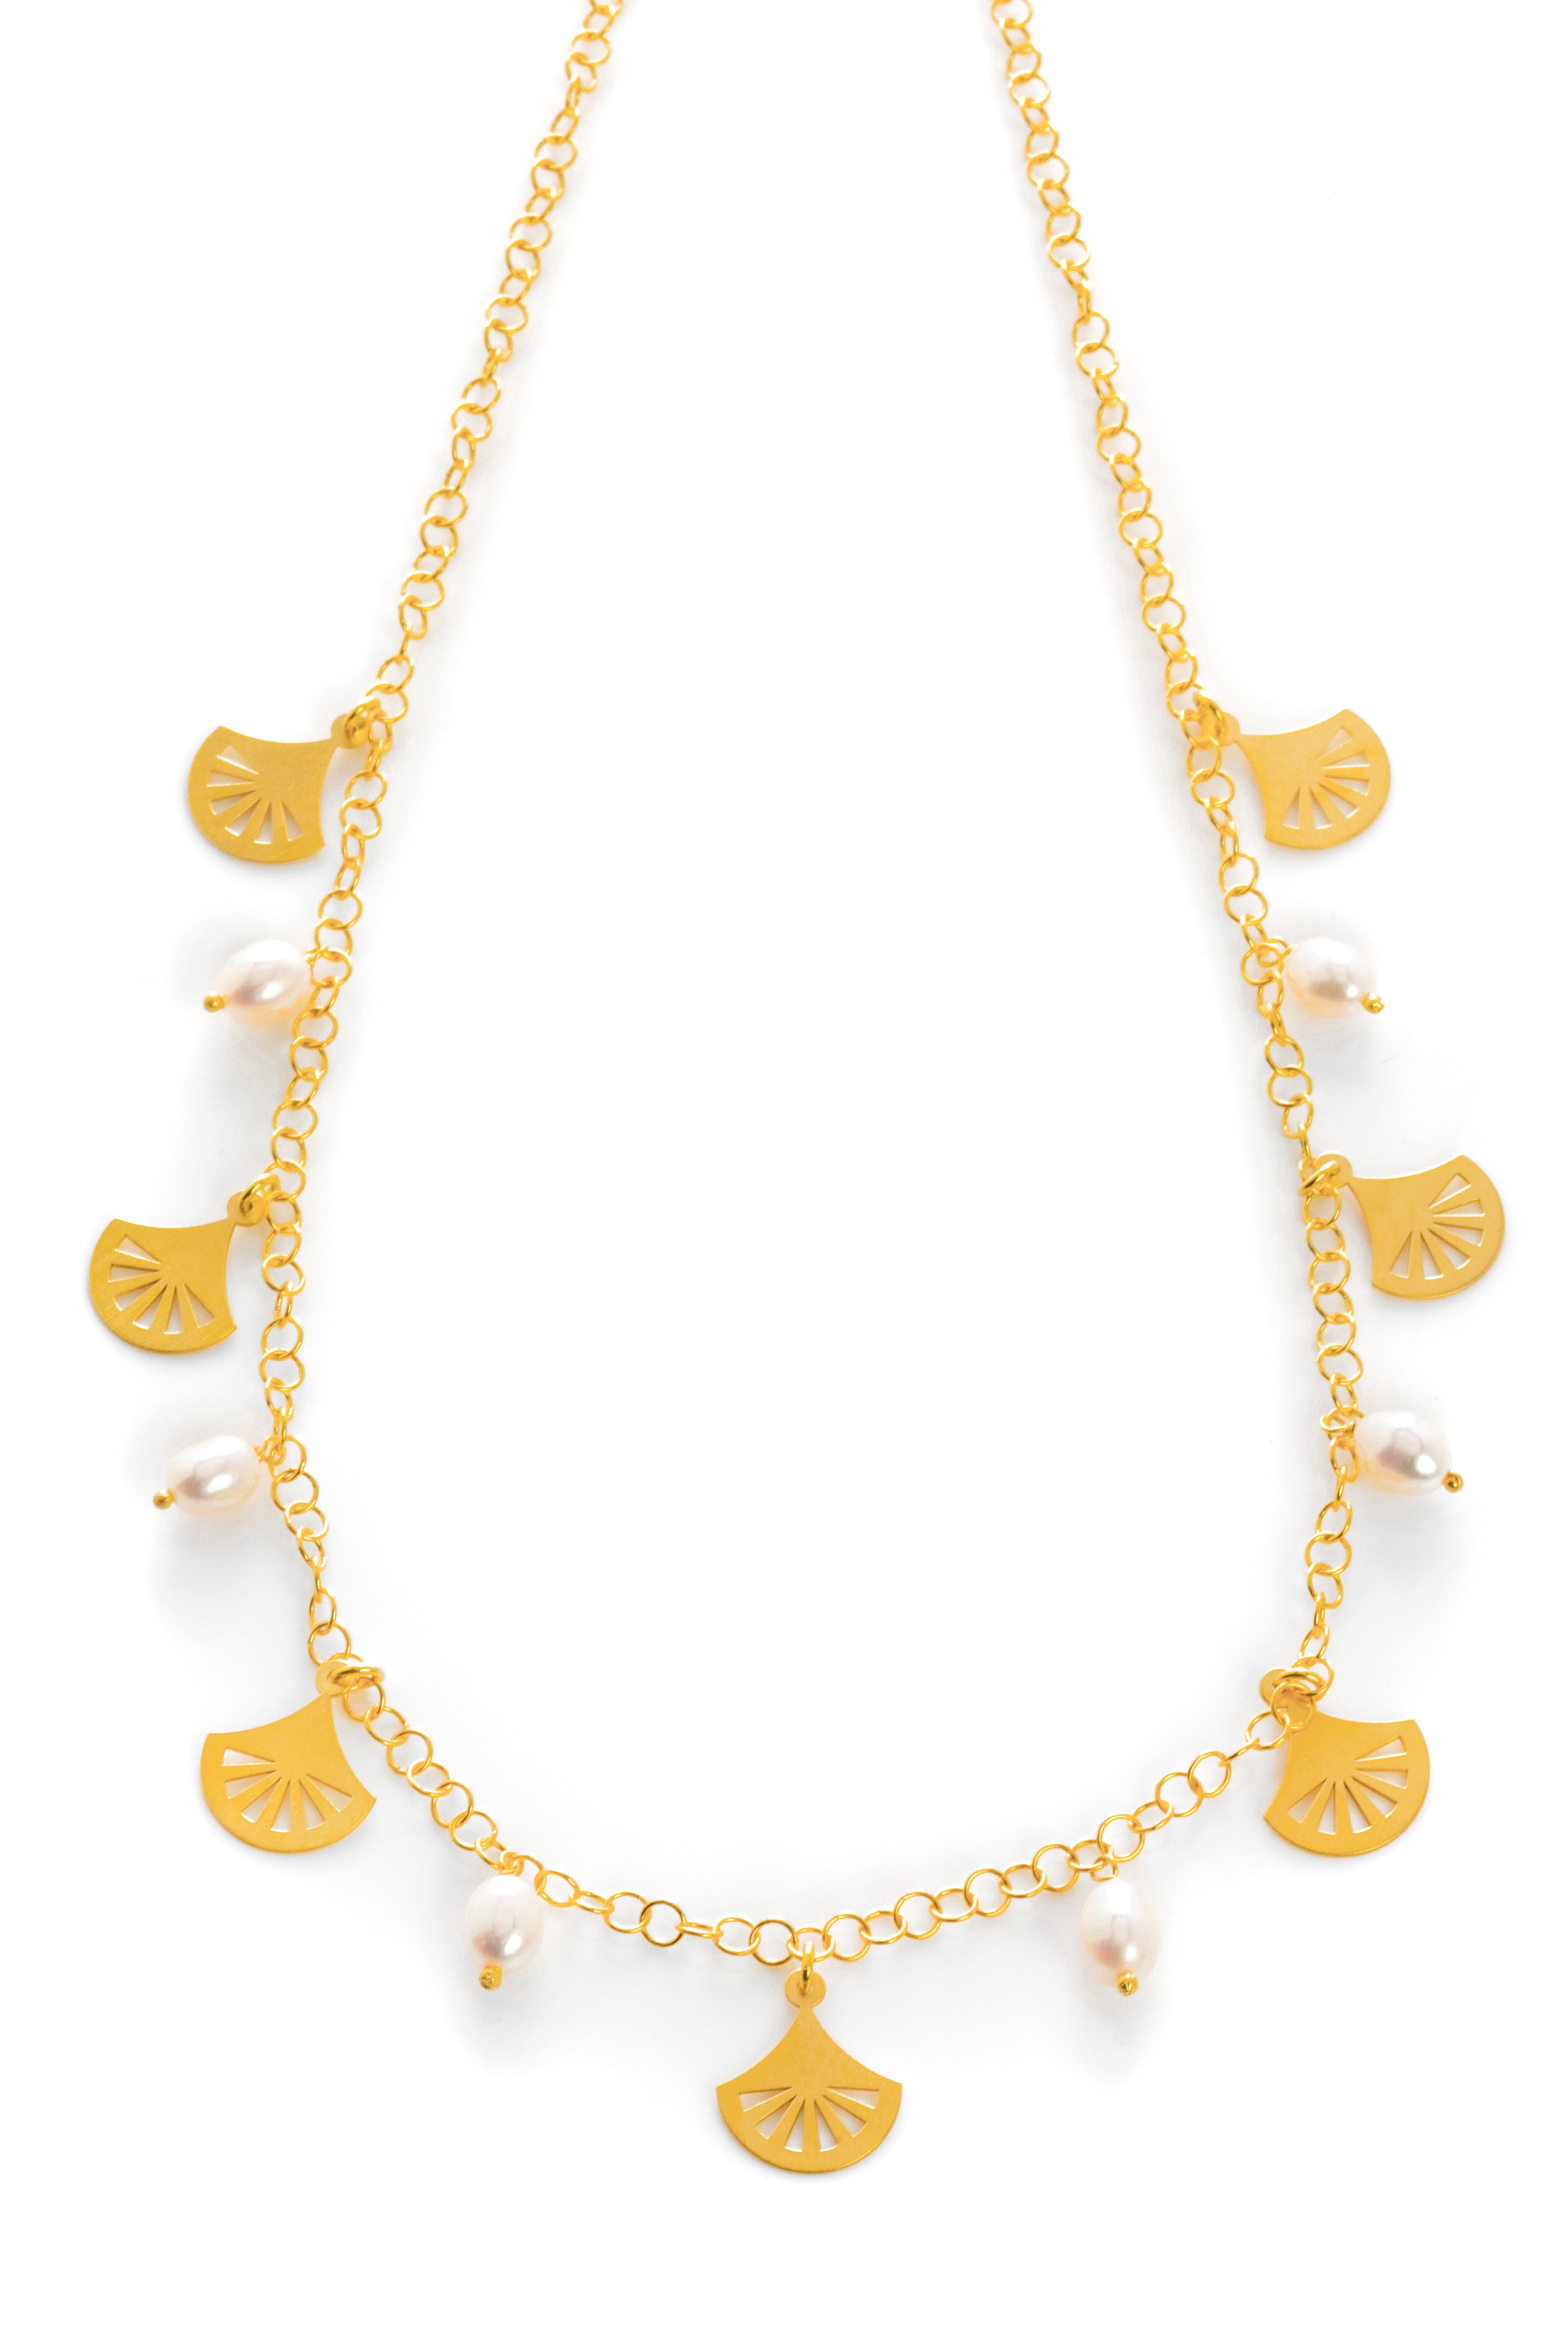 Andromache necklace silver 925° by Pearl Martini